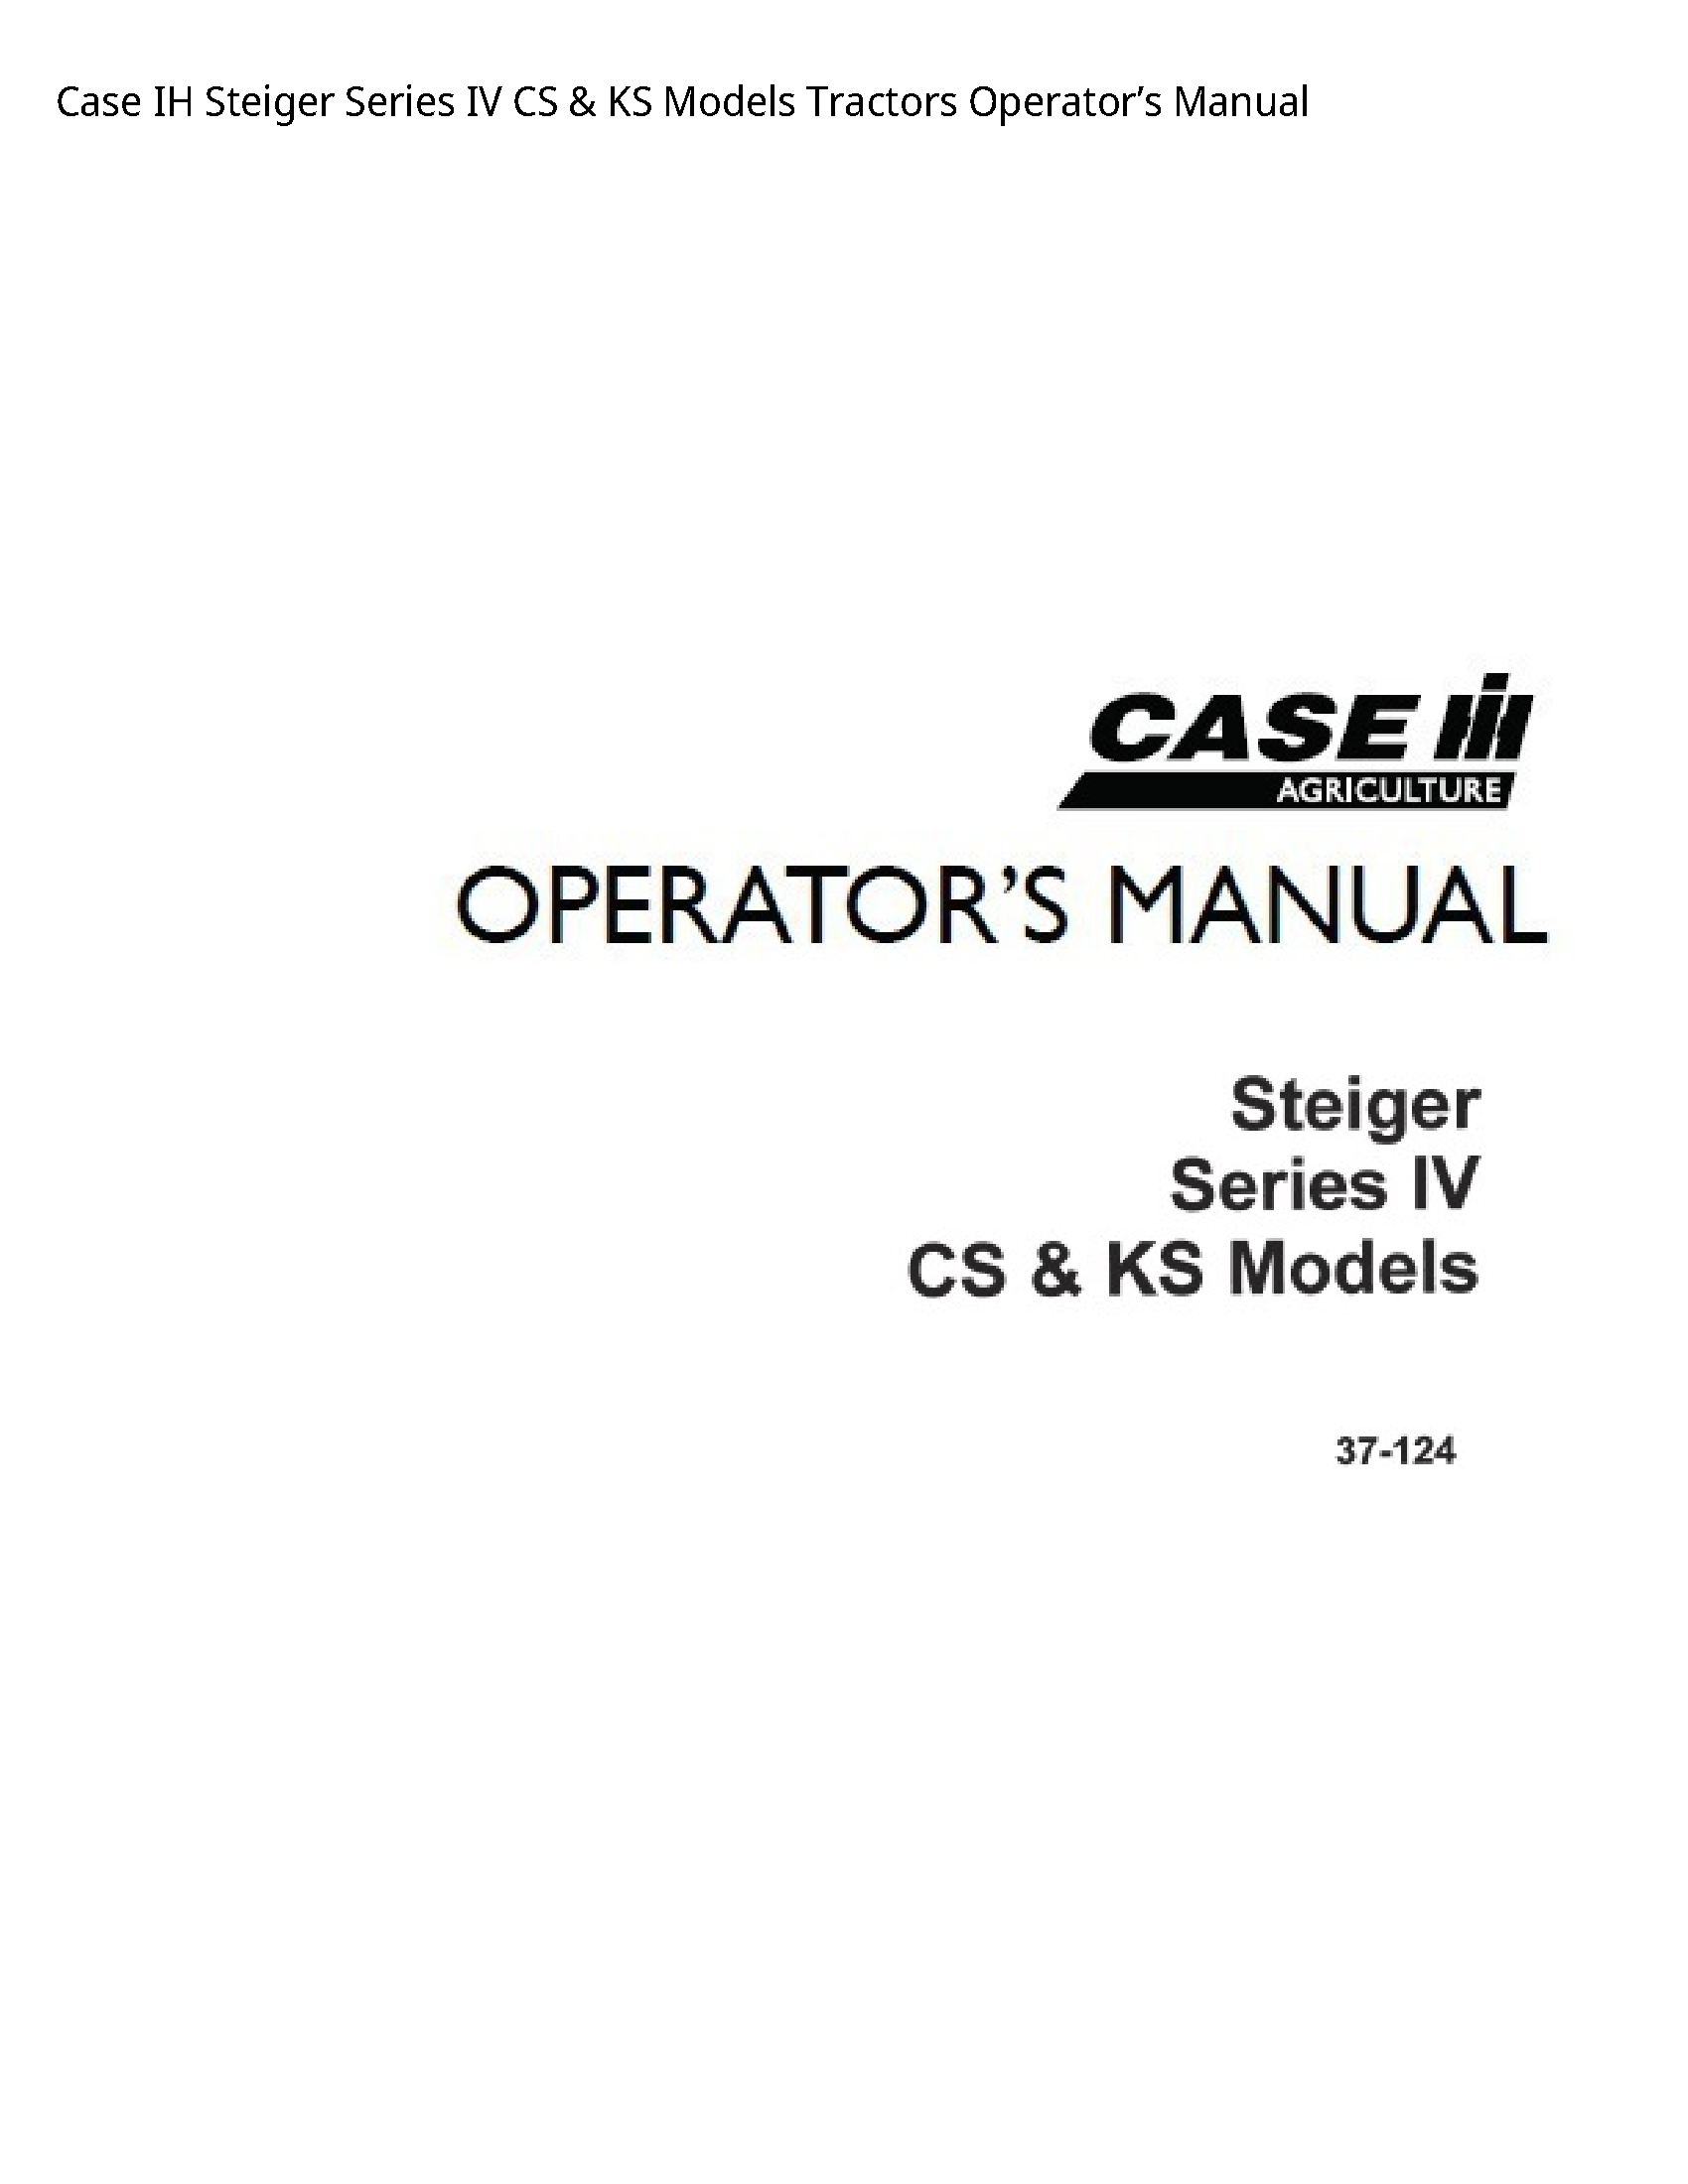 Case/Case IH IH Steiger Series IV CS KS Tractors Operator’s manual